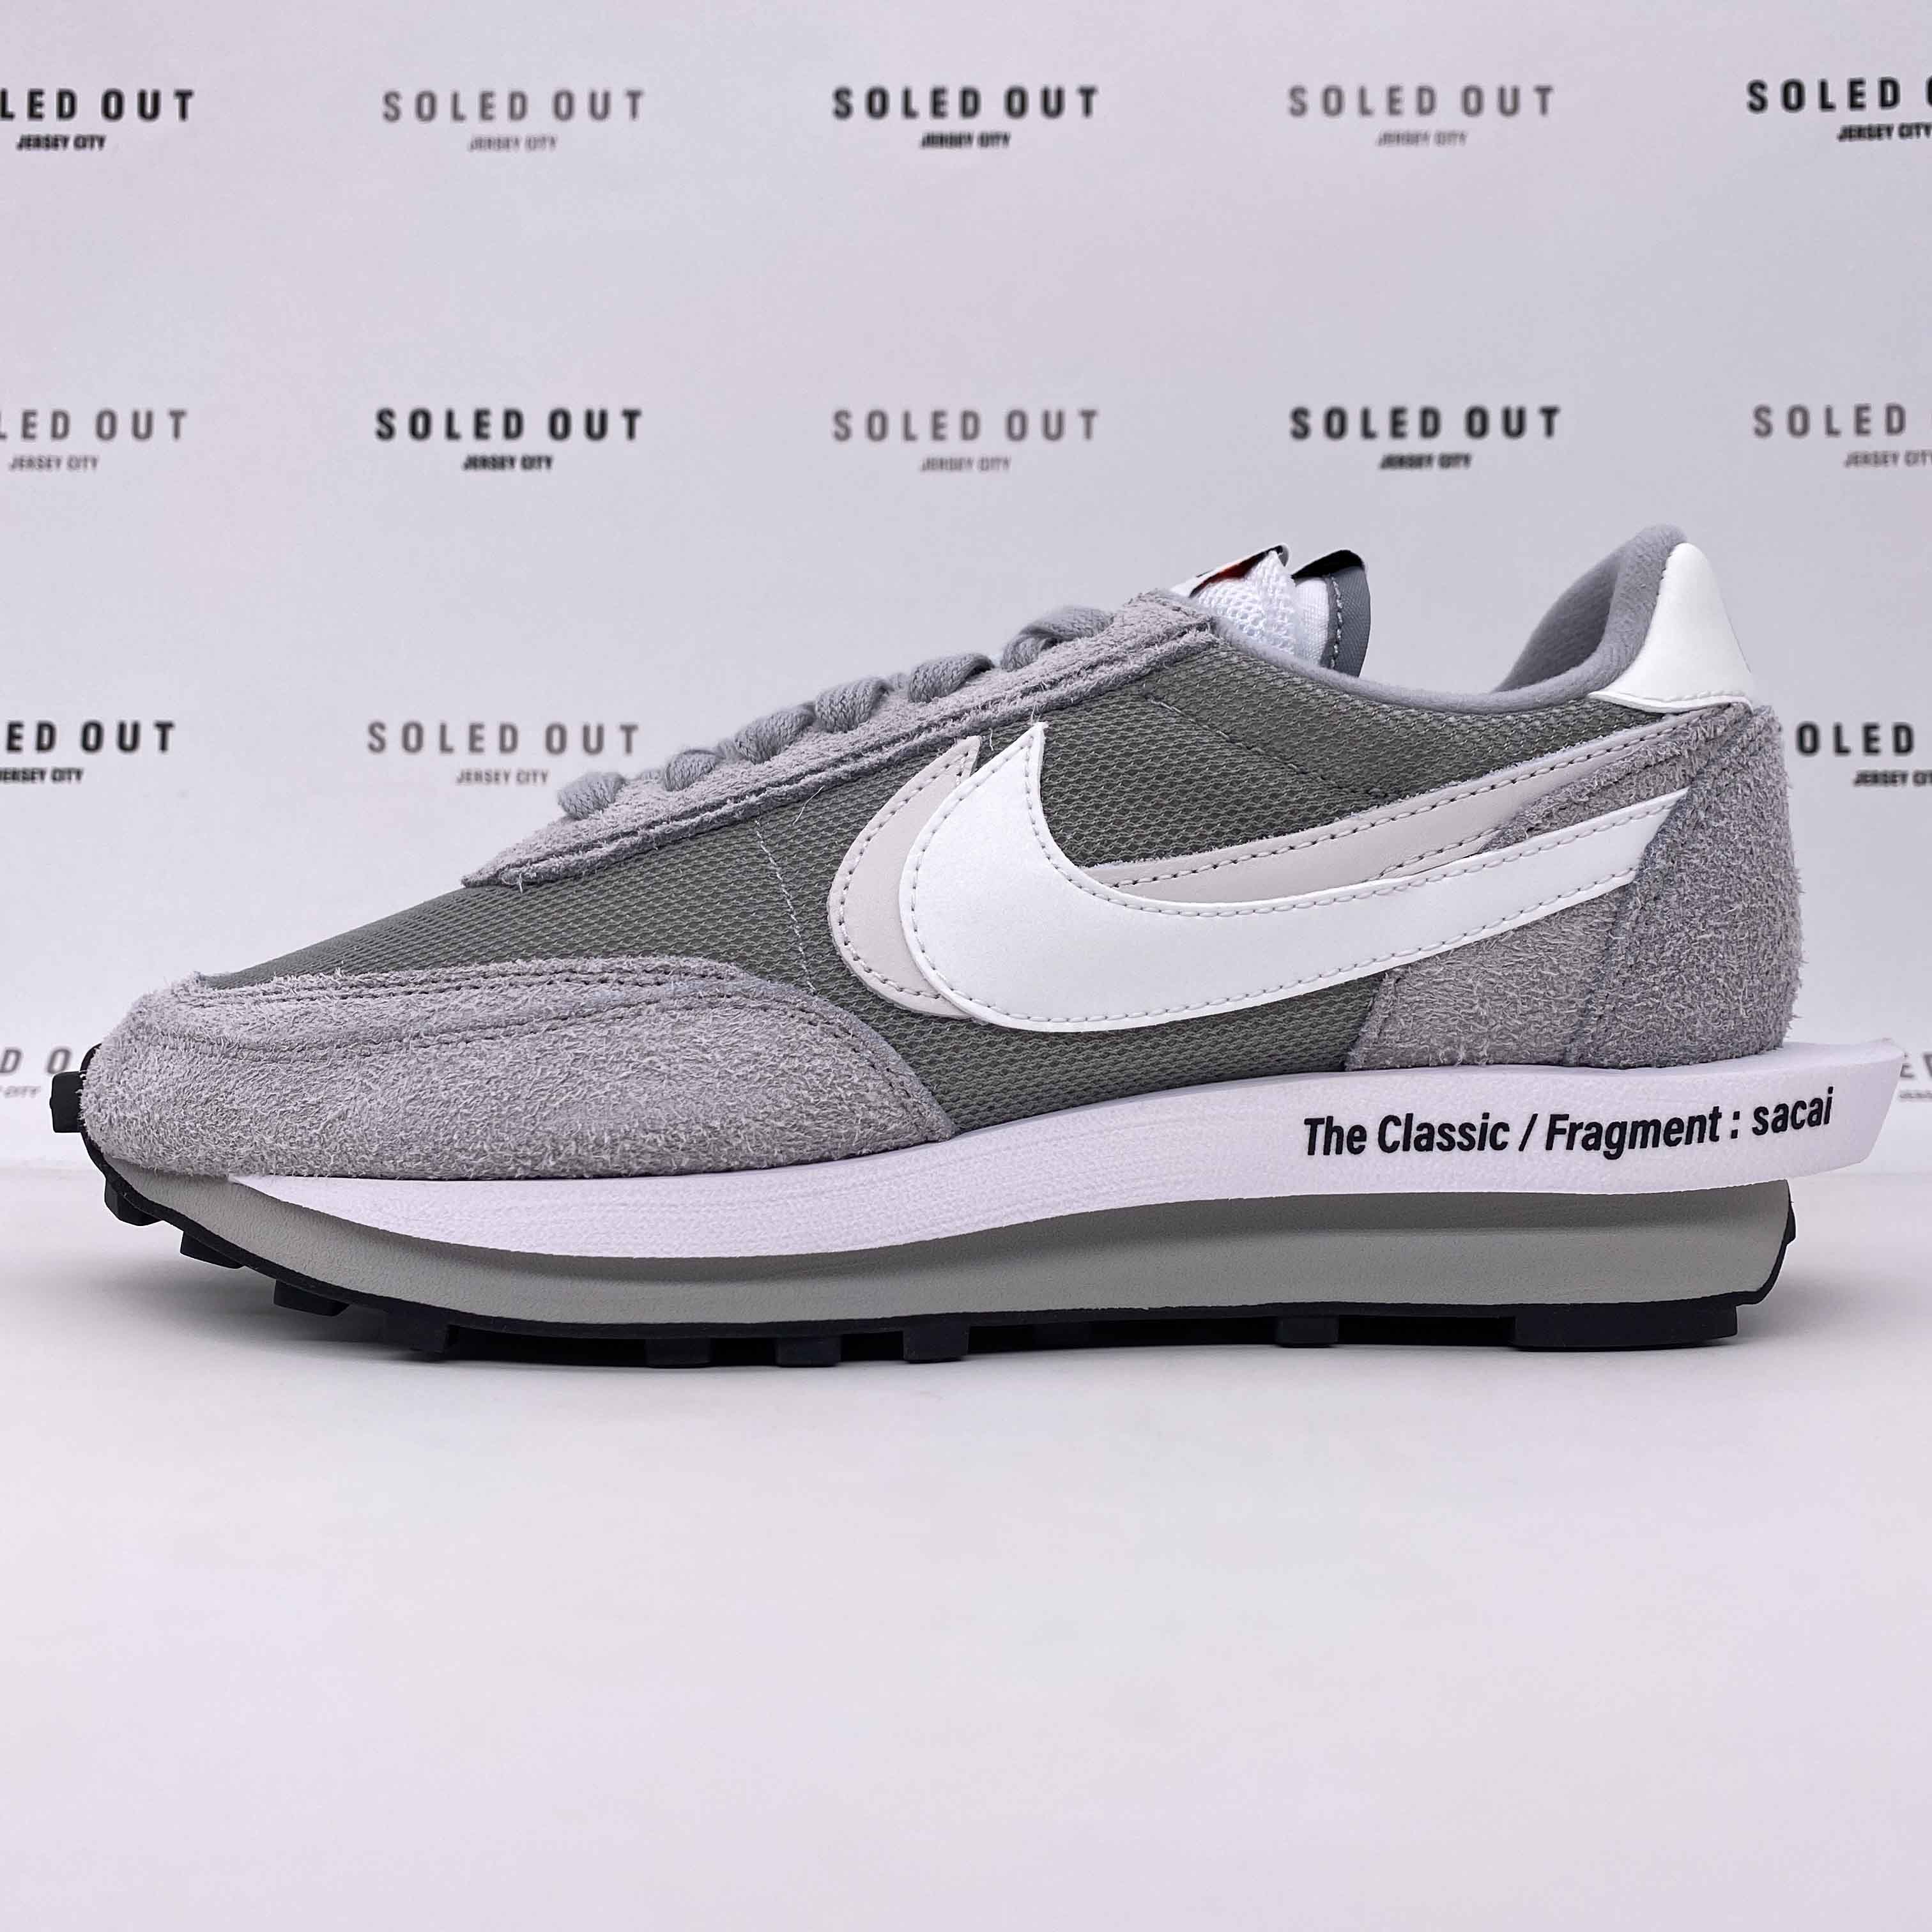 Nike LD WAFFLE / Sacai Fragment Grey 2021 Size 7.5 – Prodibio Shops